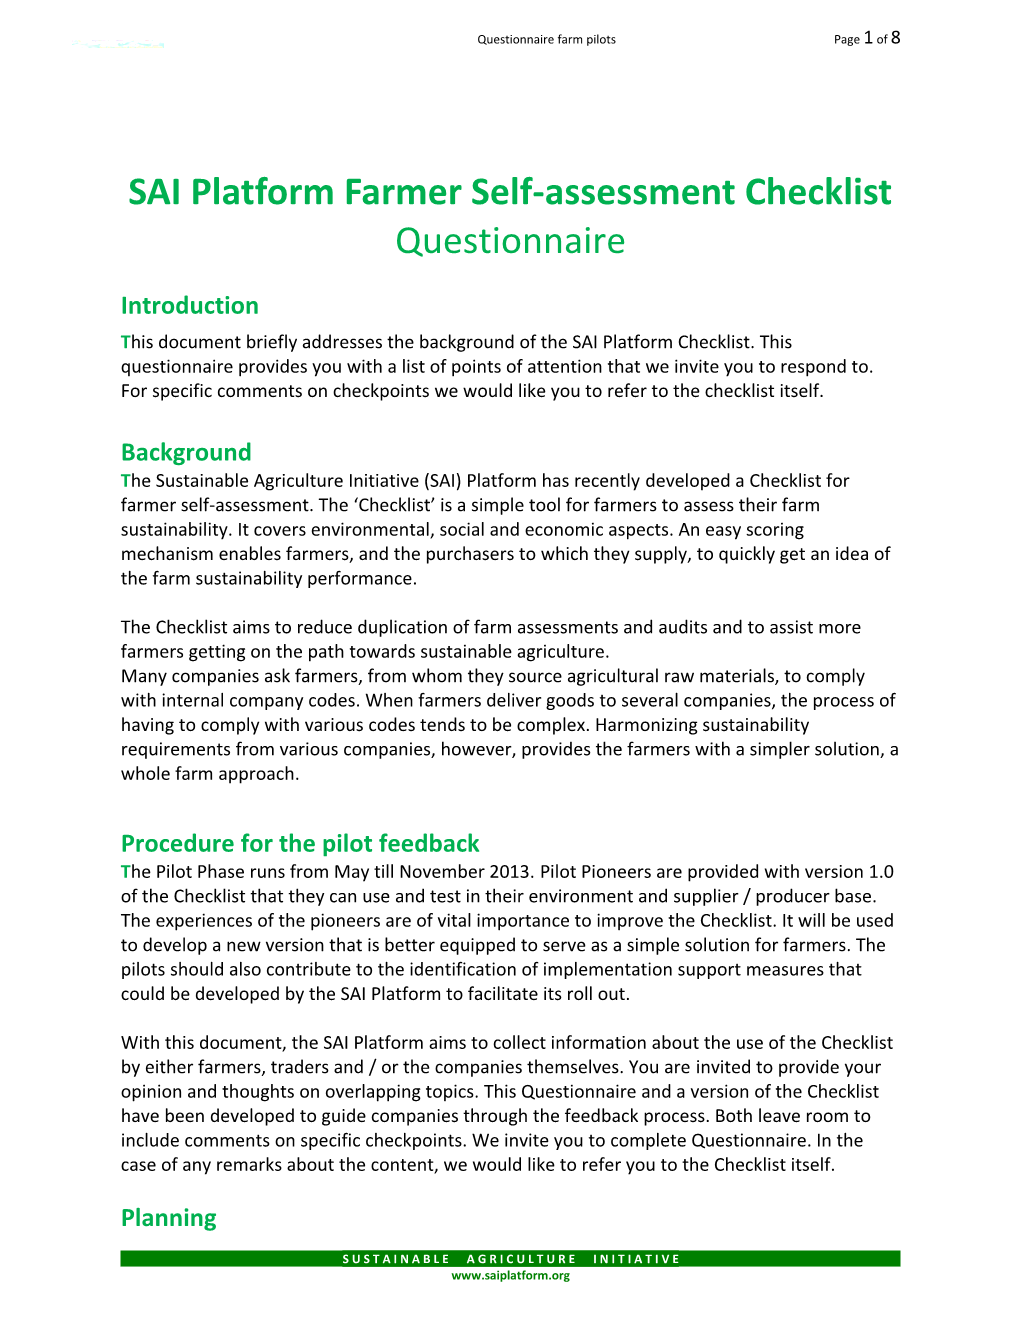 SAI Platform Farmer Self-Assessment Checklist